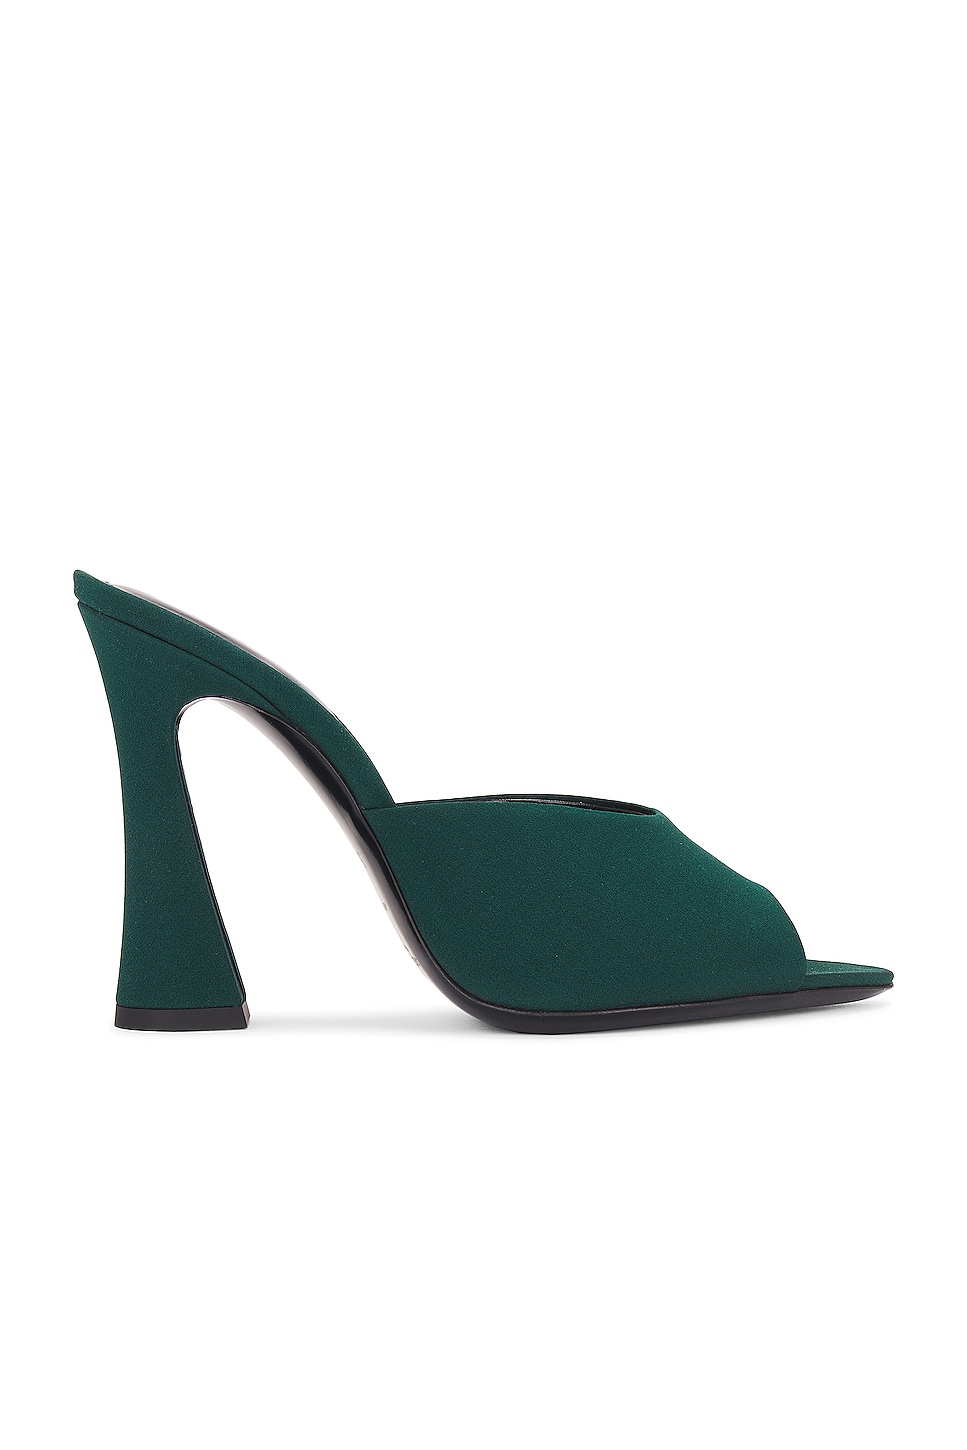 Image 1 of Saint Laurent Suite Mule Sandal in Drawn Green